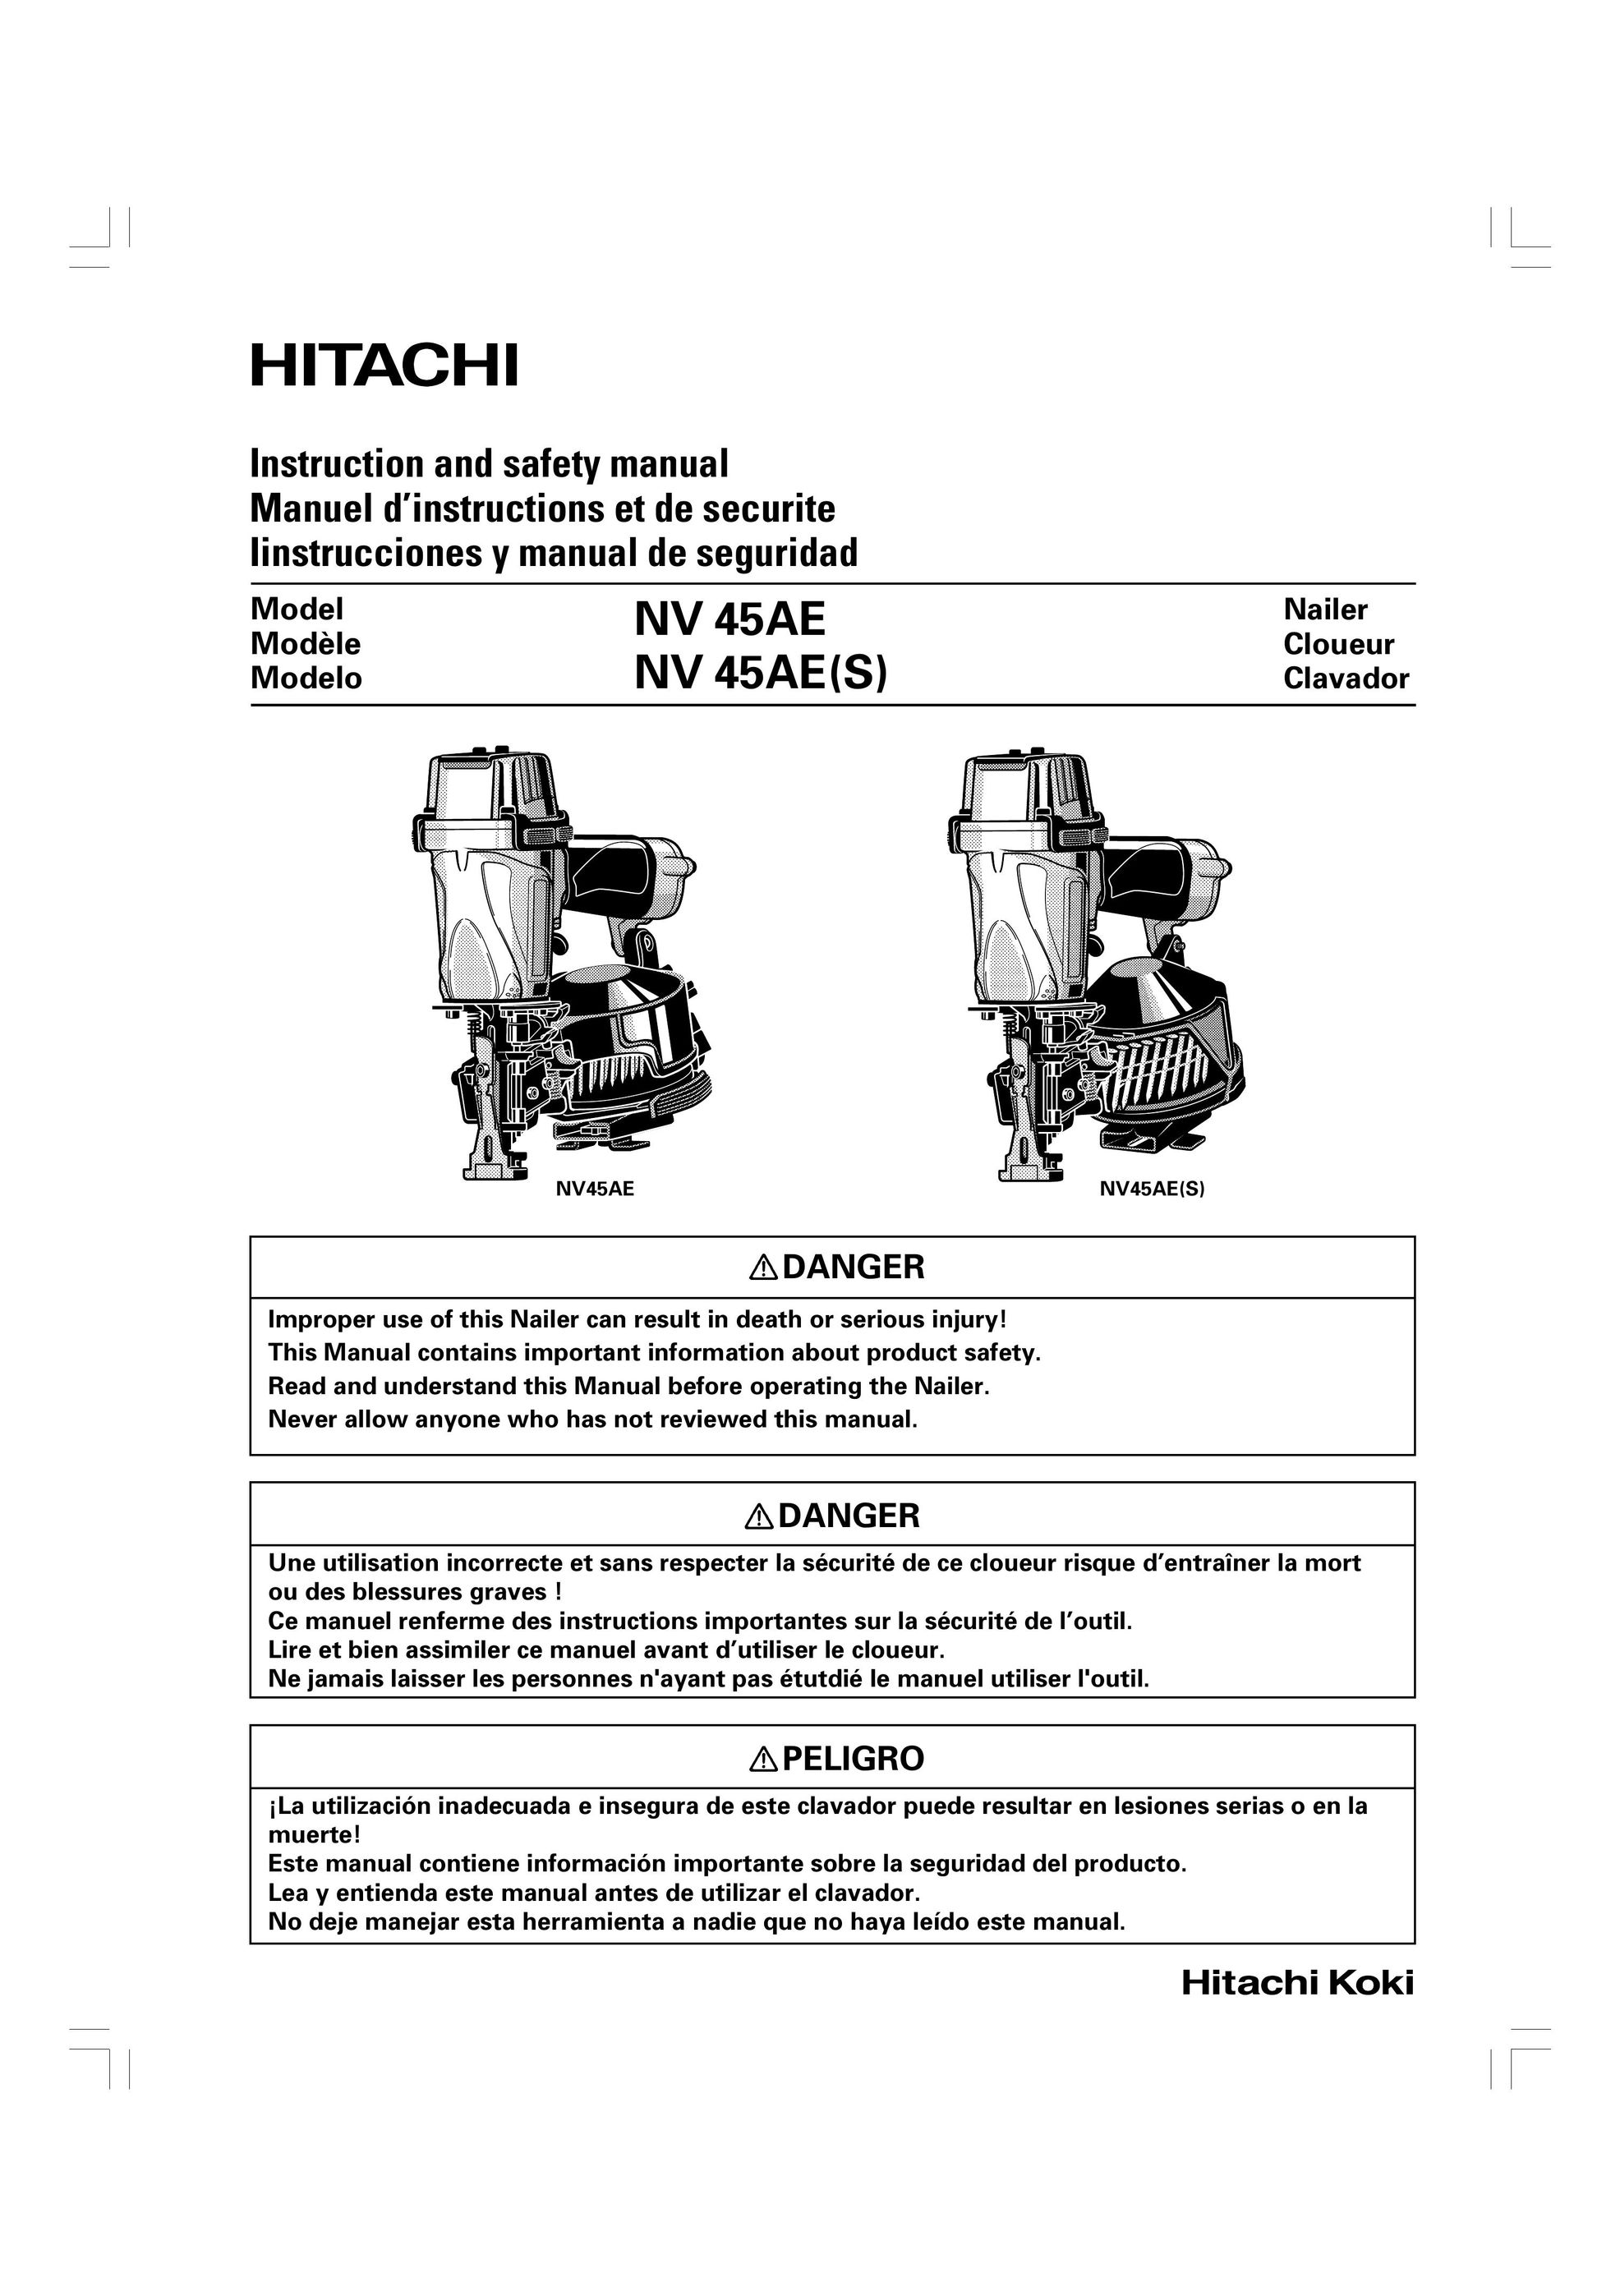 Hitachi NV 45AE Nail Gun User Manual